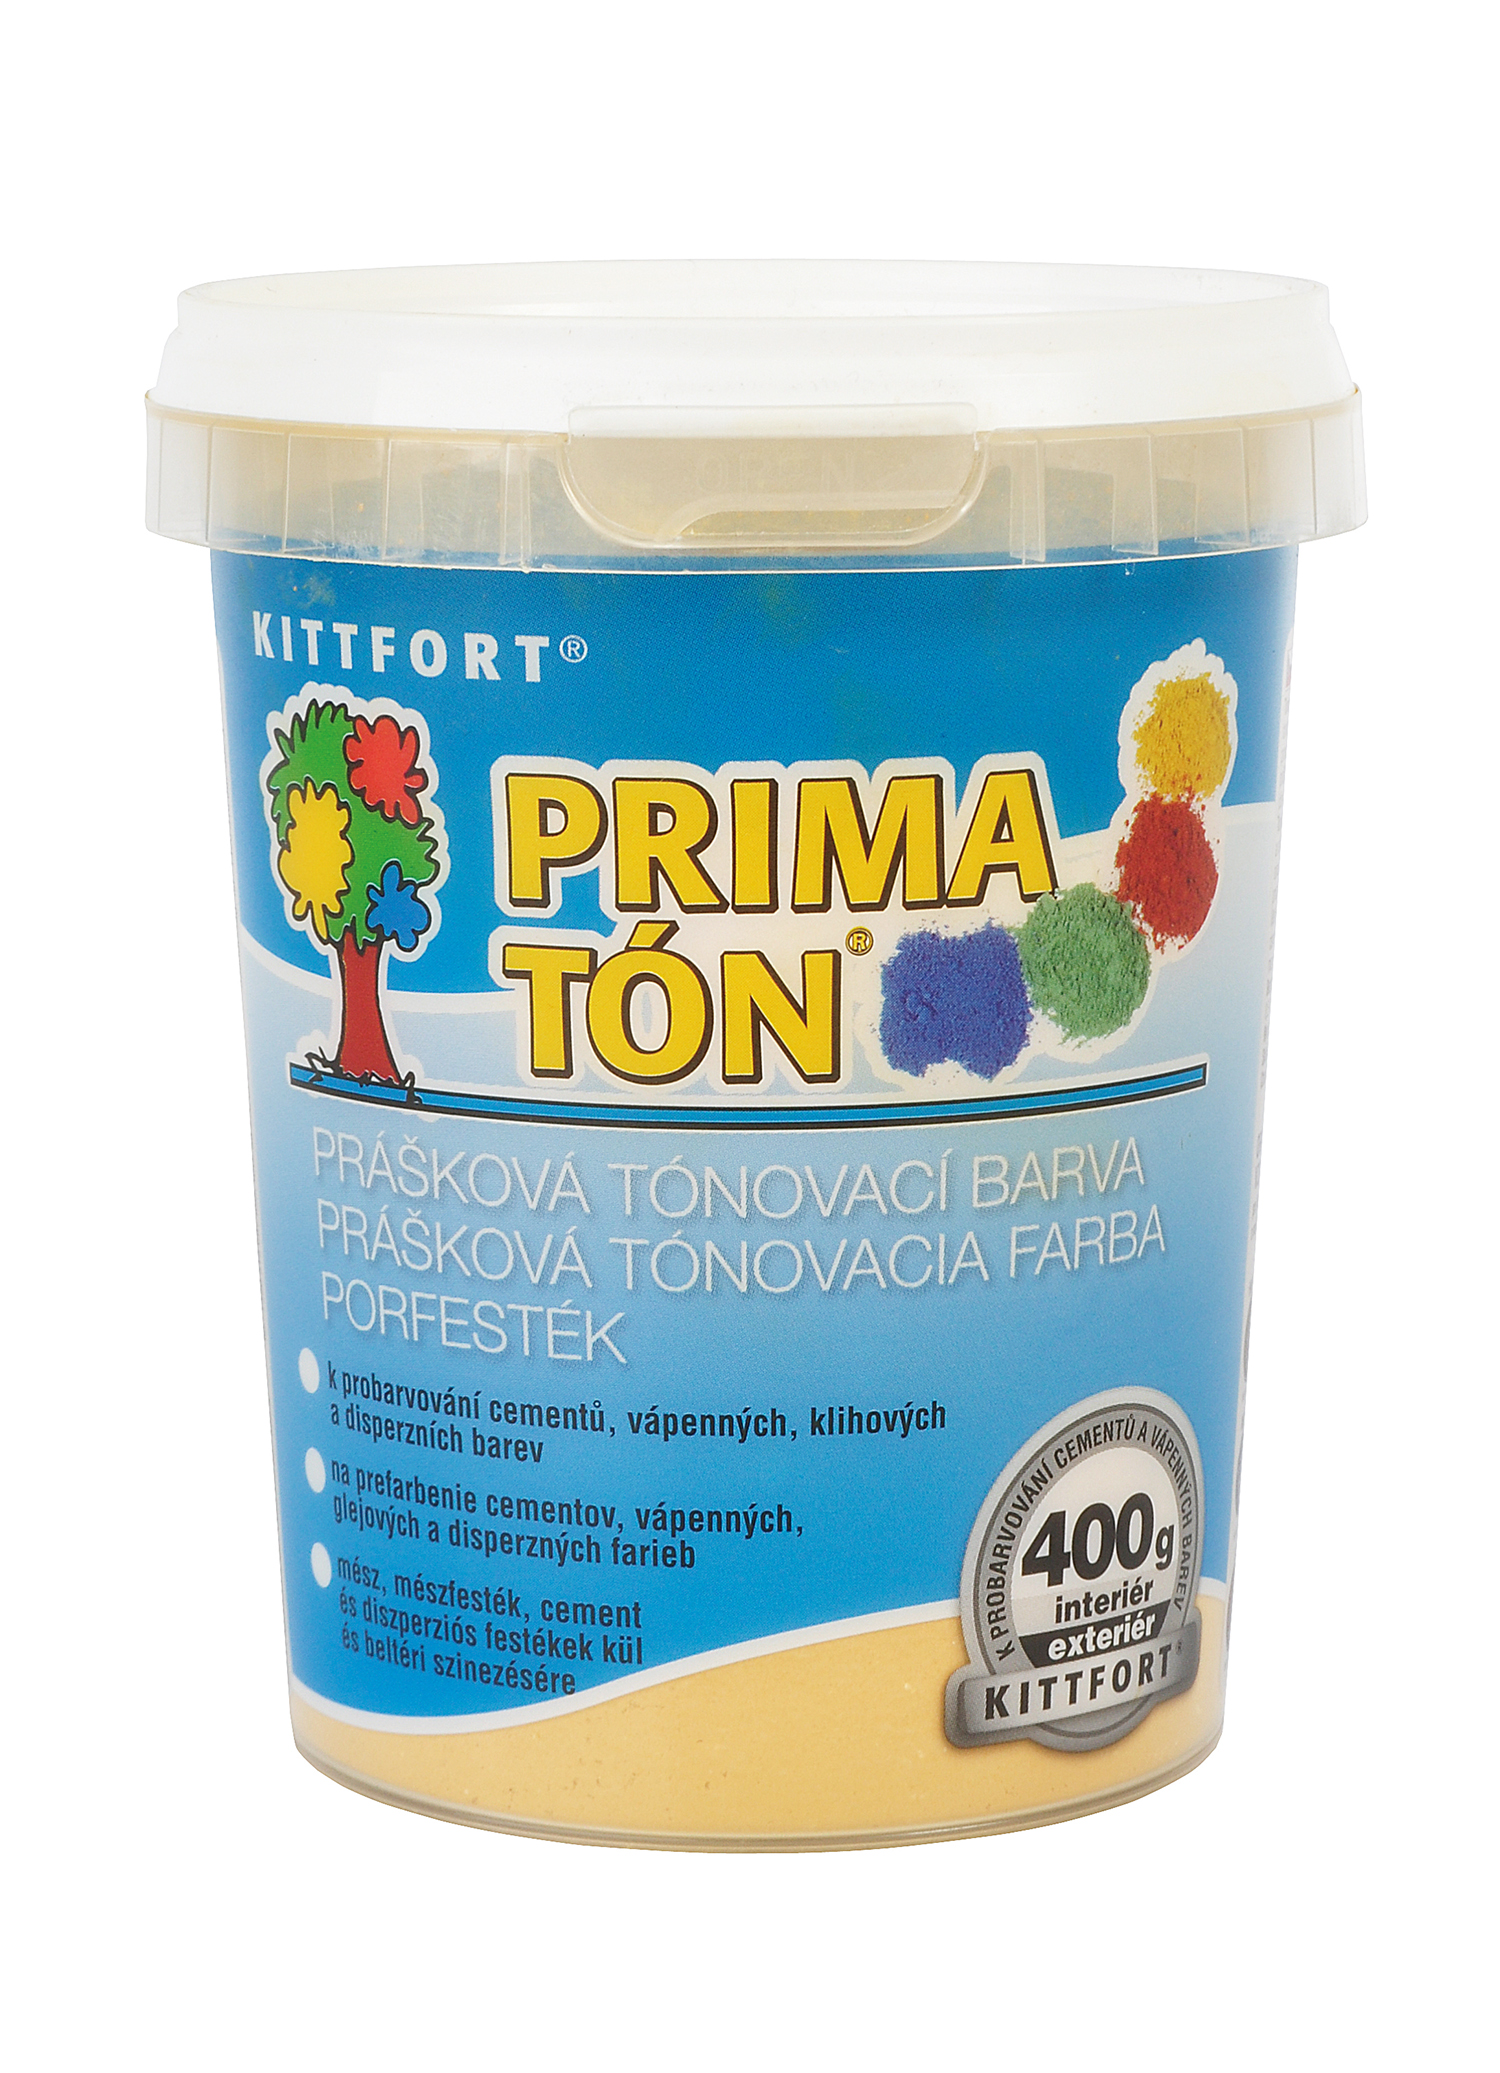 Kittfort PRIMATÓN prášková tónovací barva 400 g